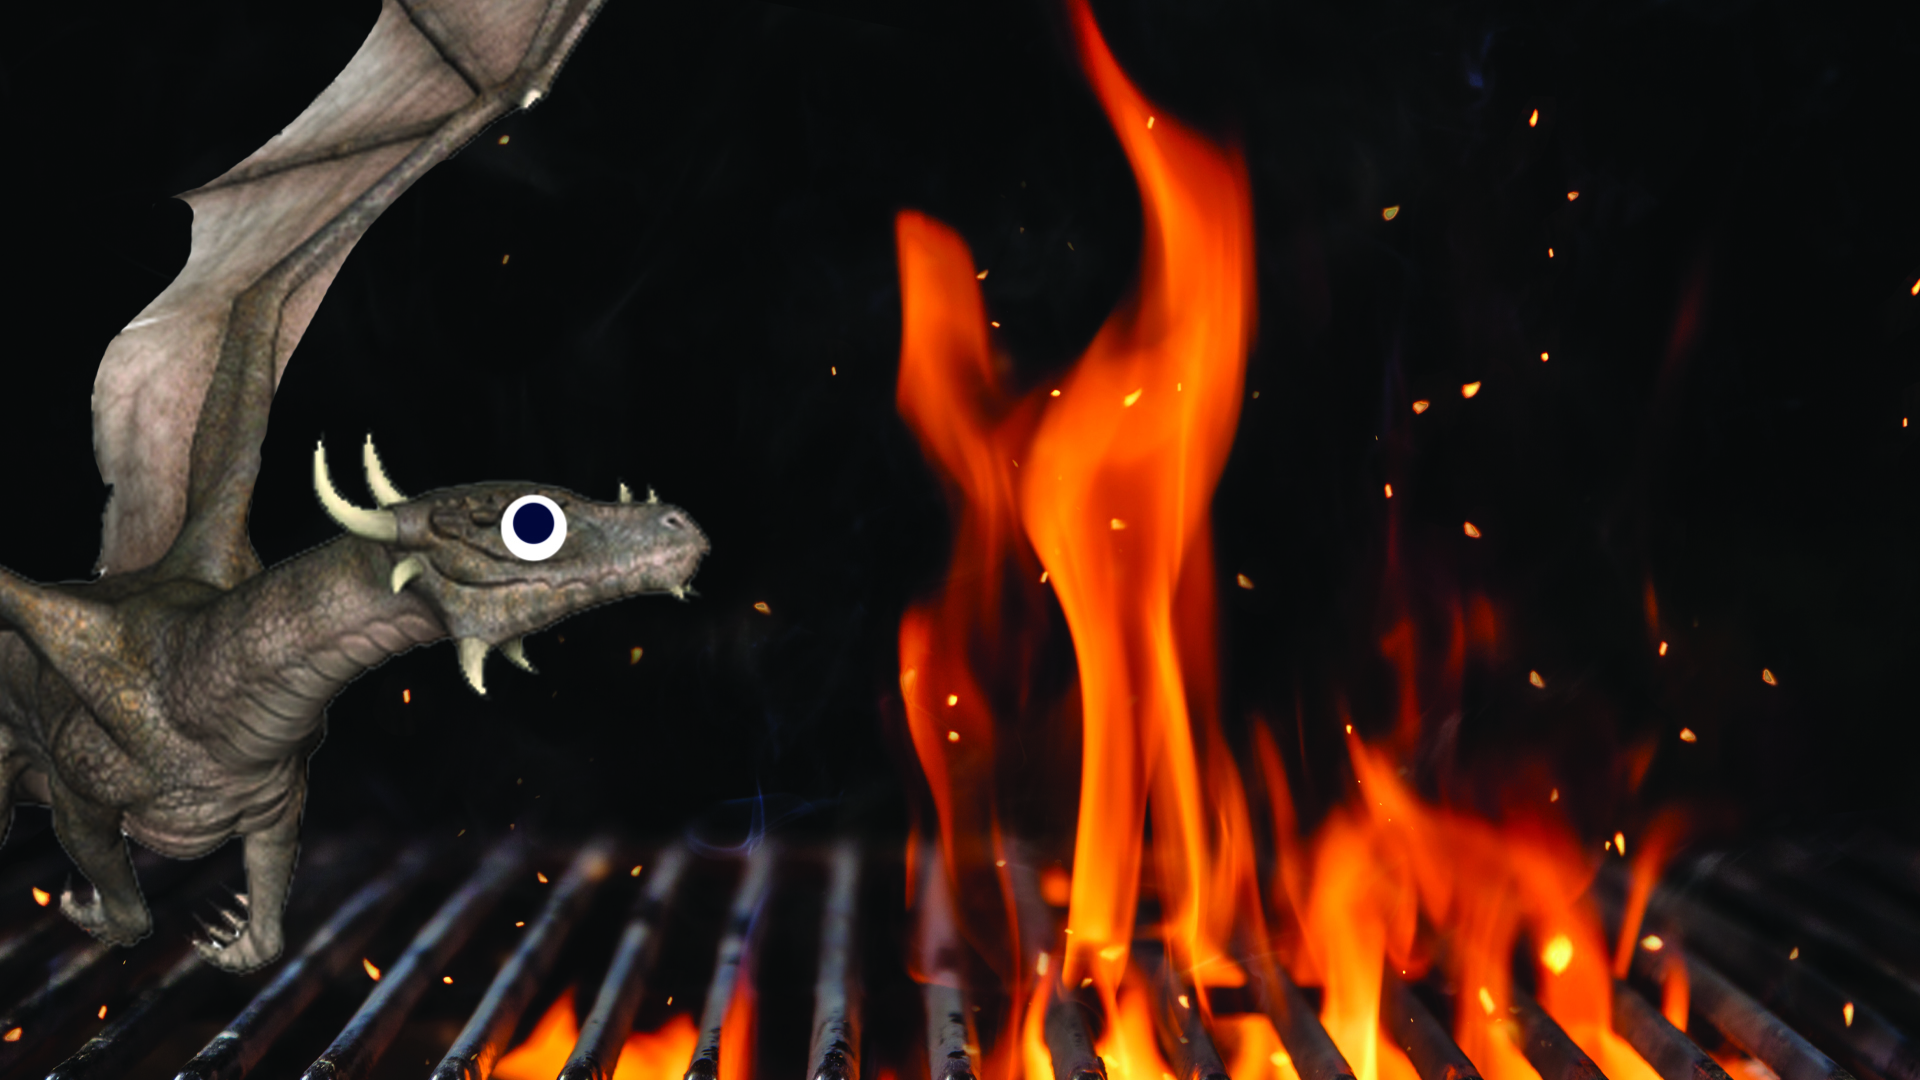 A dragon starting a barbecue